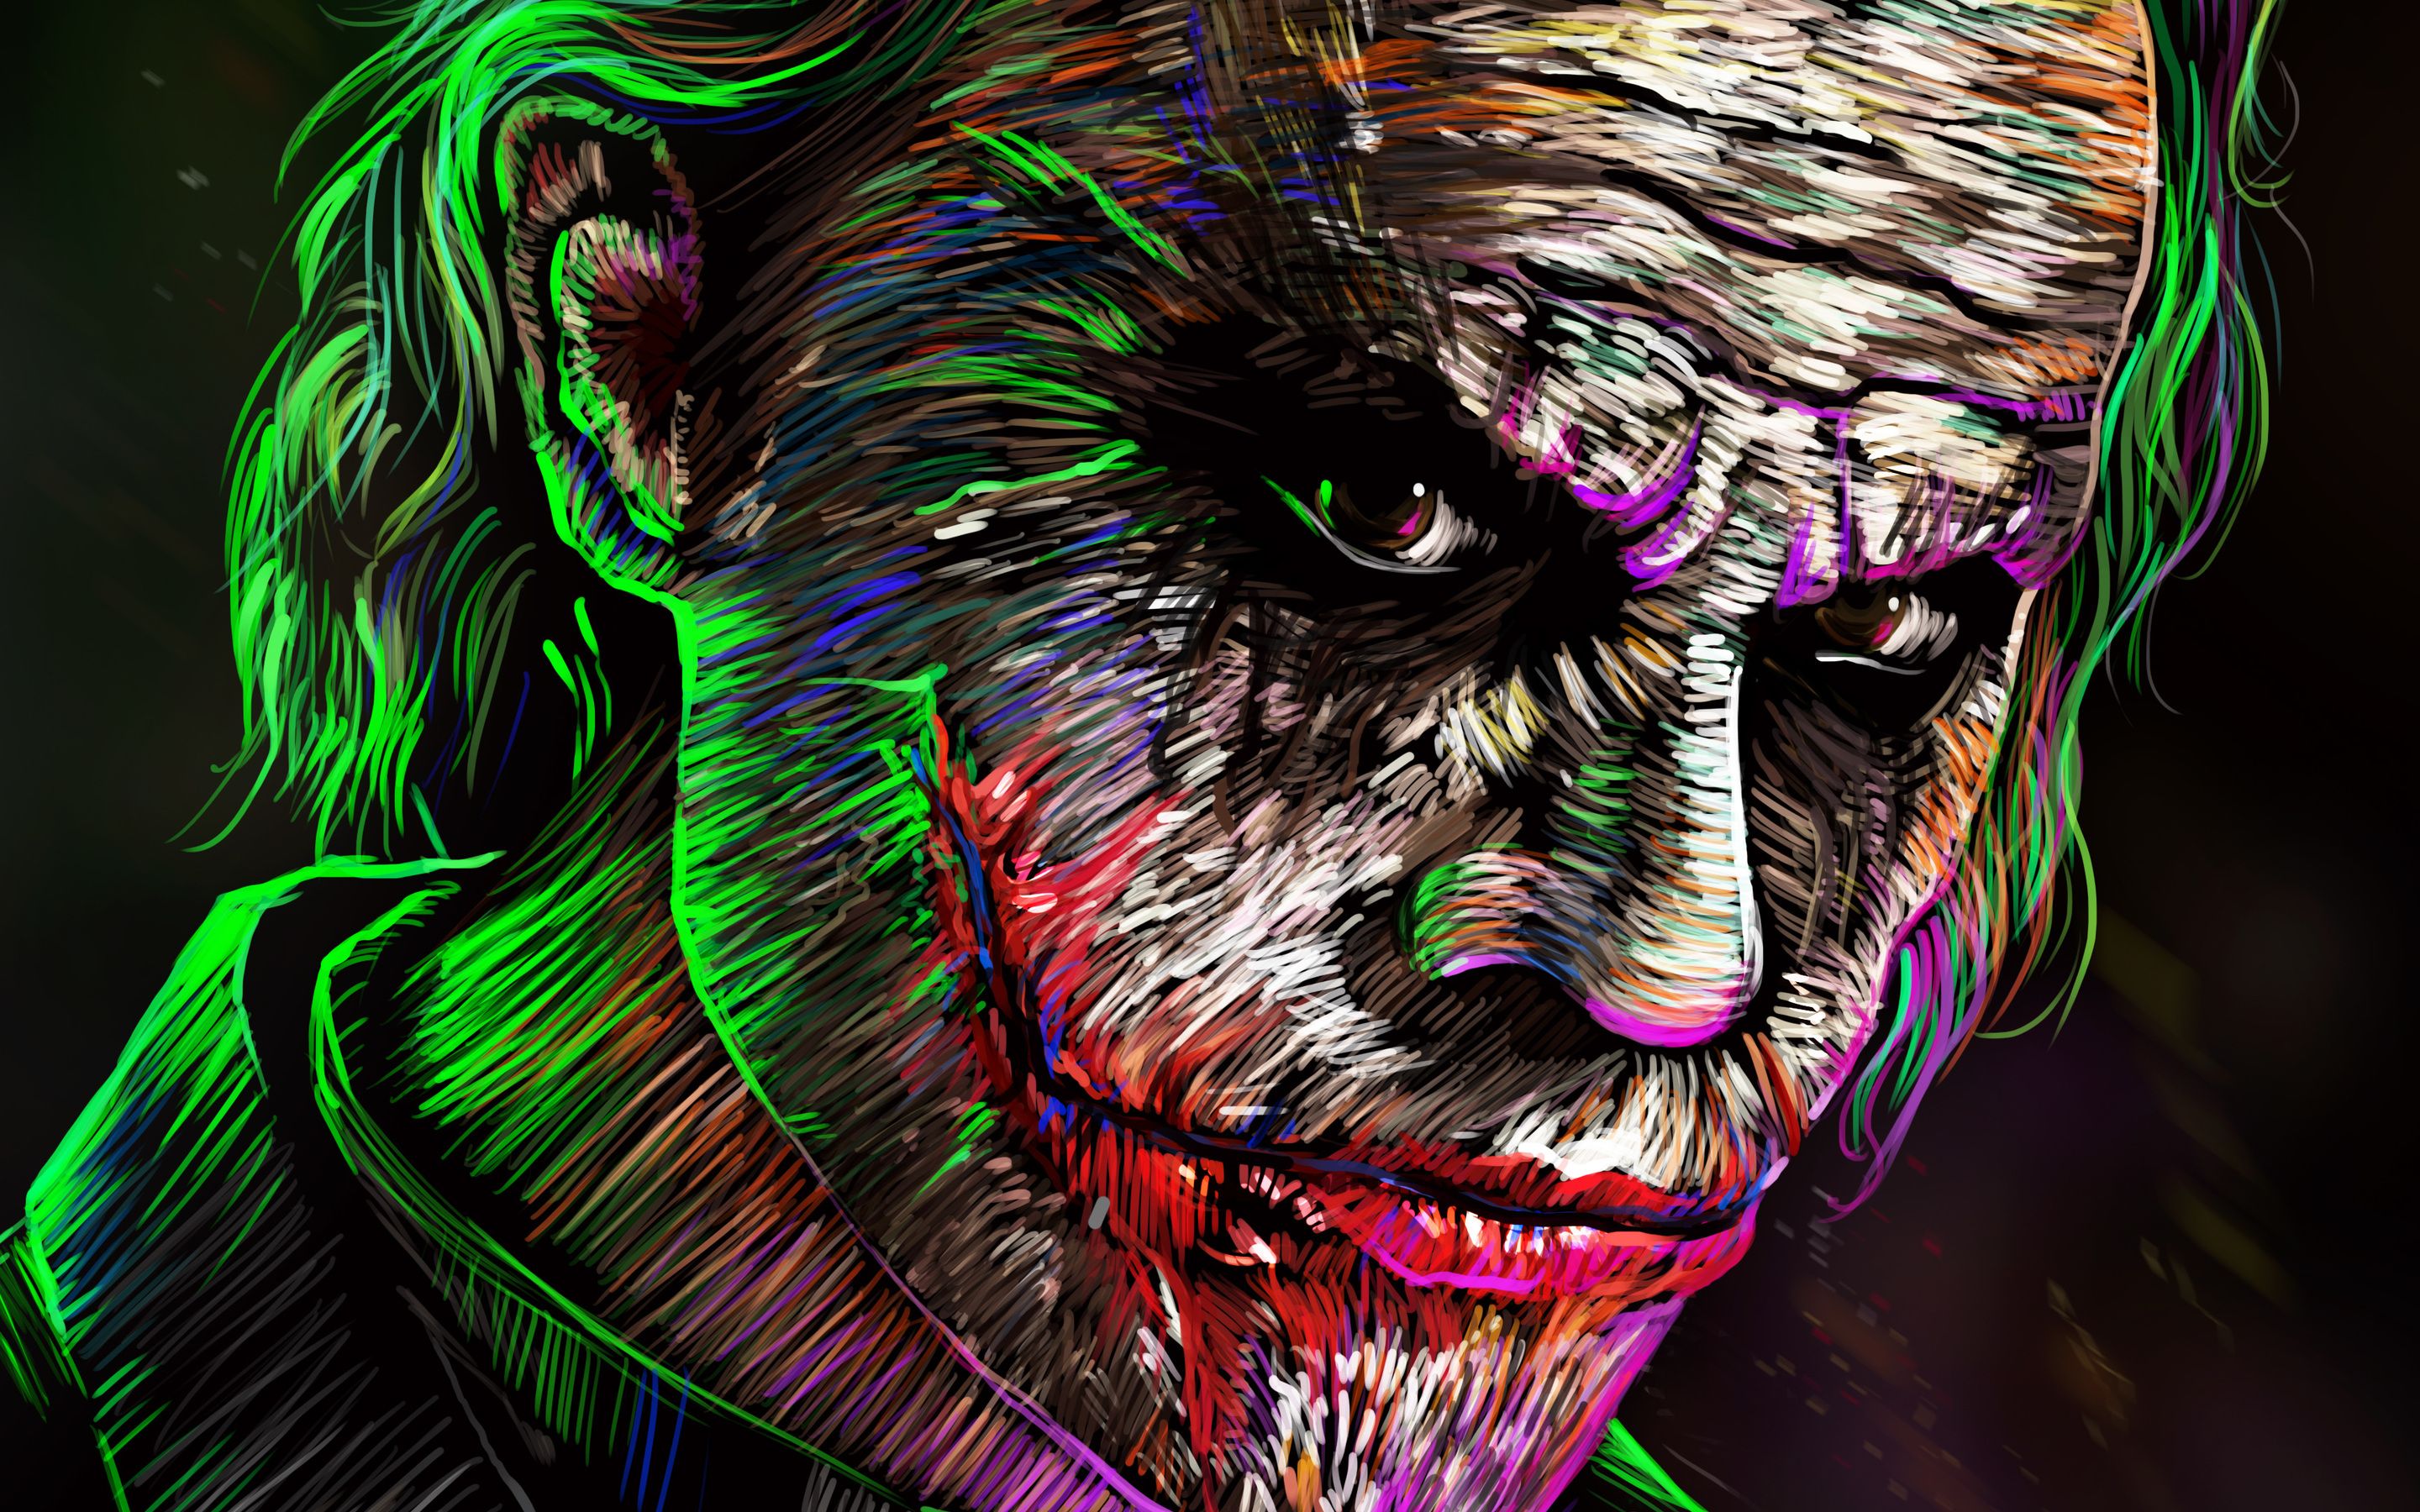 Joker 4k Digital Art Macbook Pro Retina HD 4k Wallpaper, Image, Background, Photo and Picture